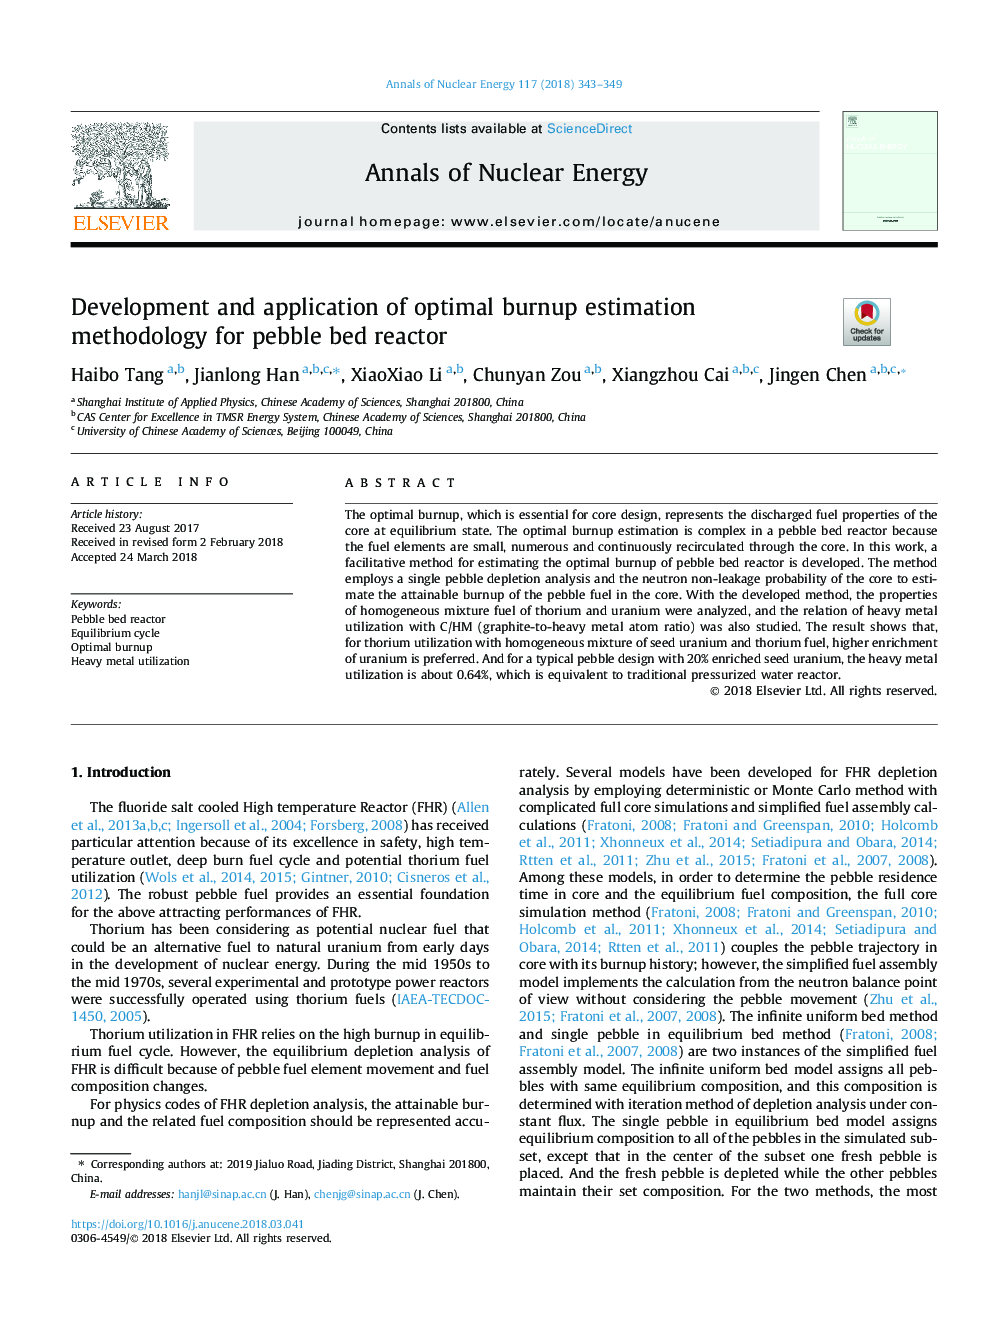 Development and application of optimal burnup estimation methodology for pebble bed reactor